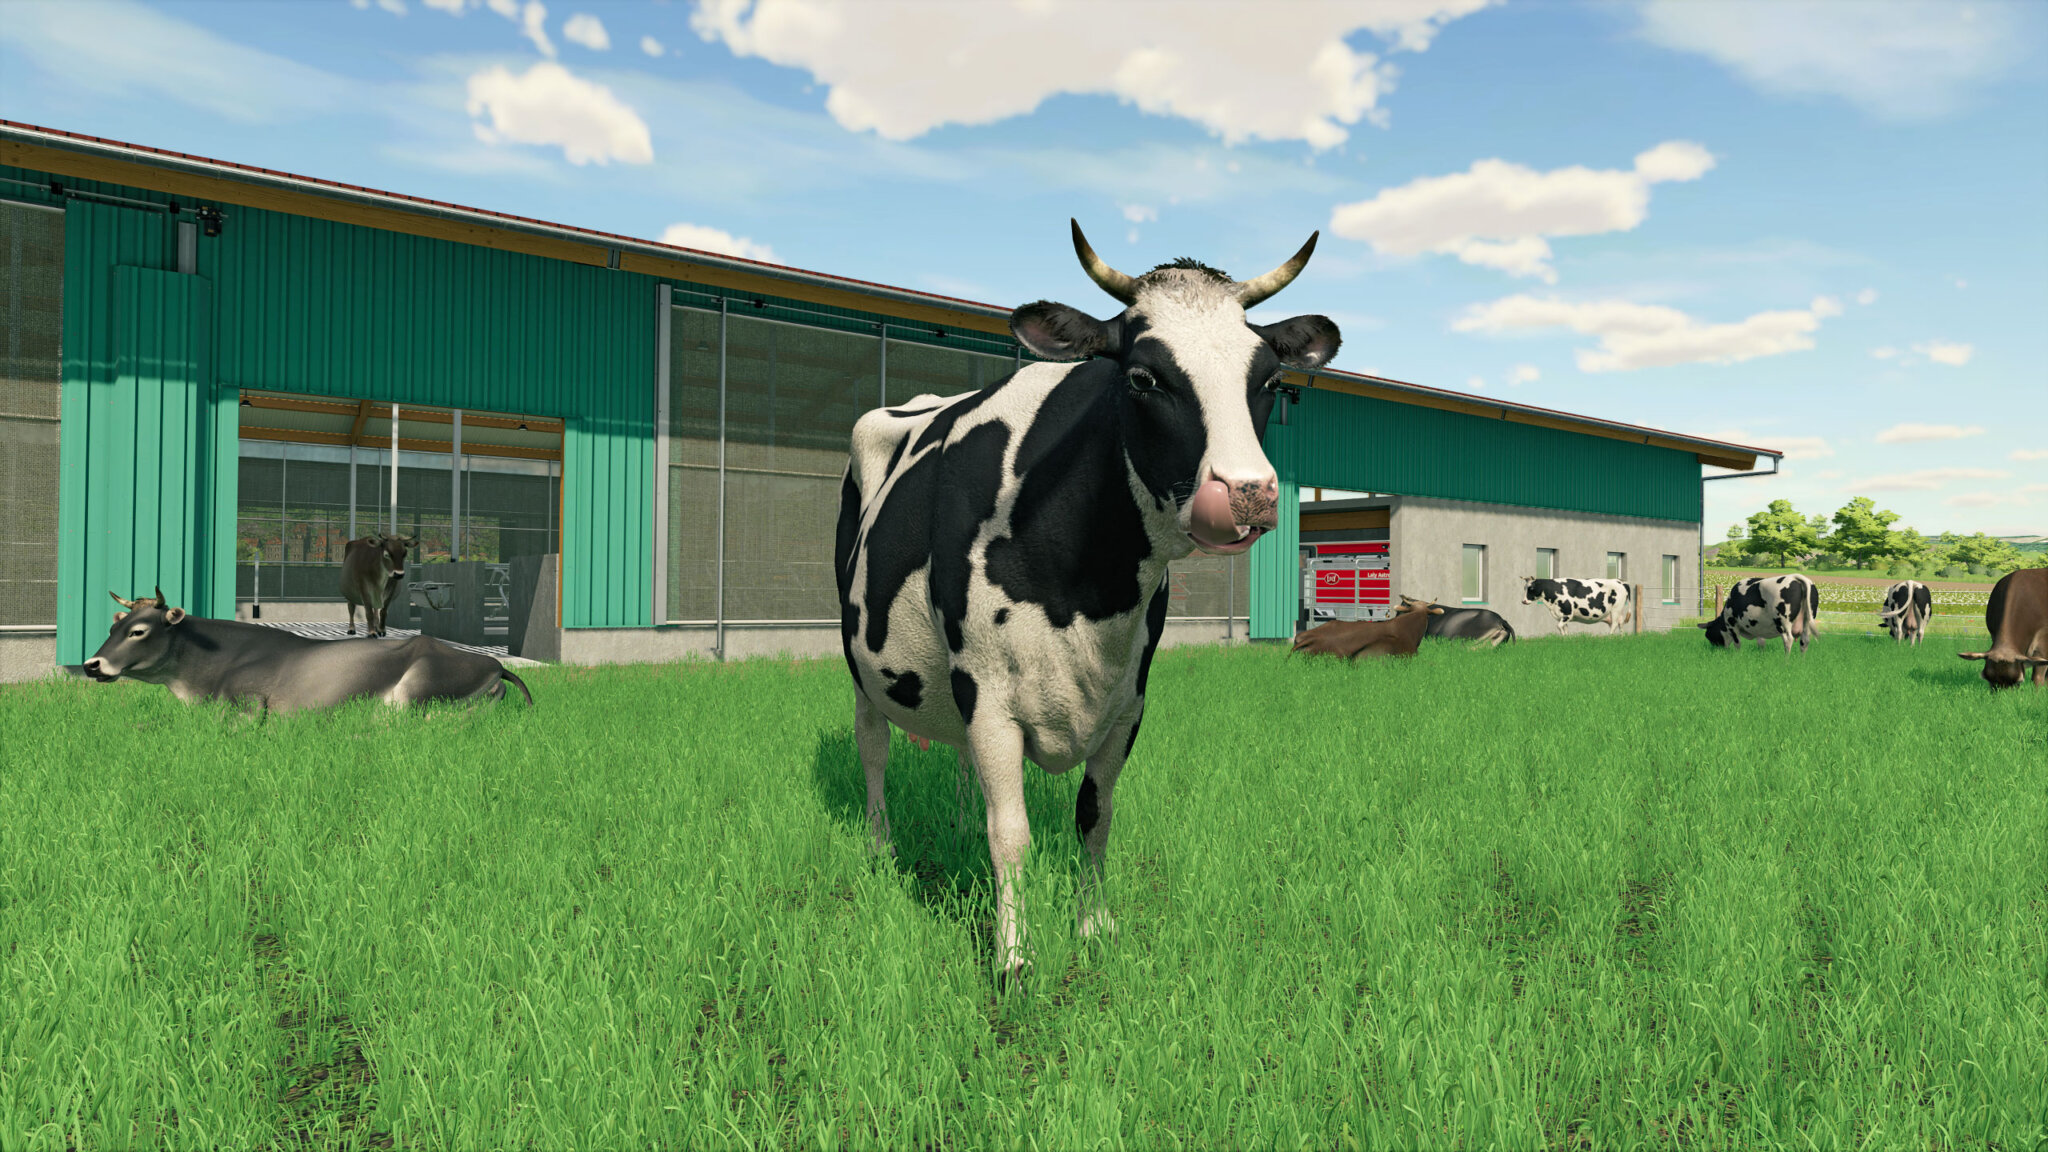 farming simulator 22 release date download free